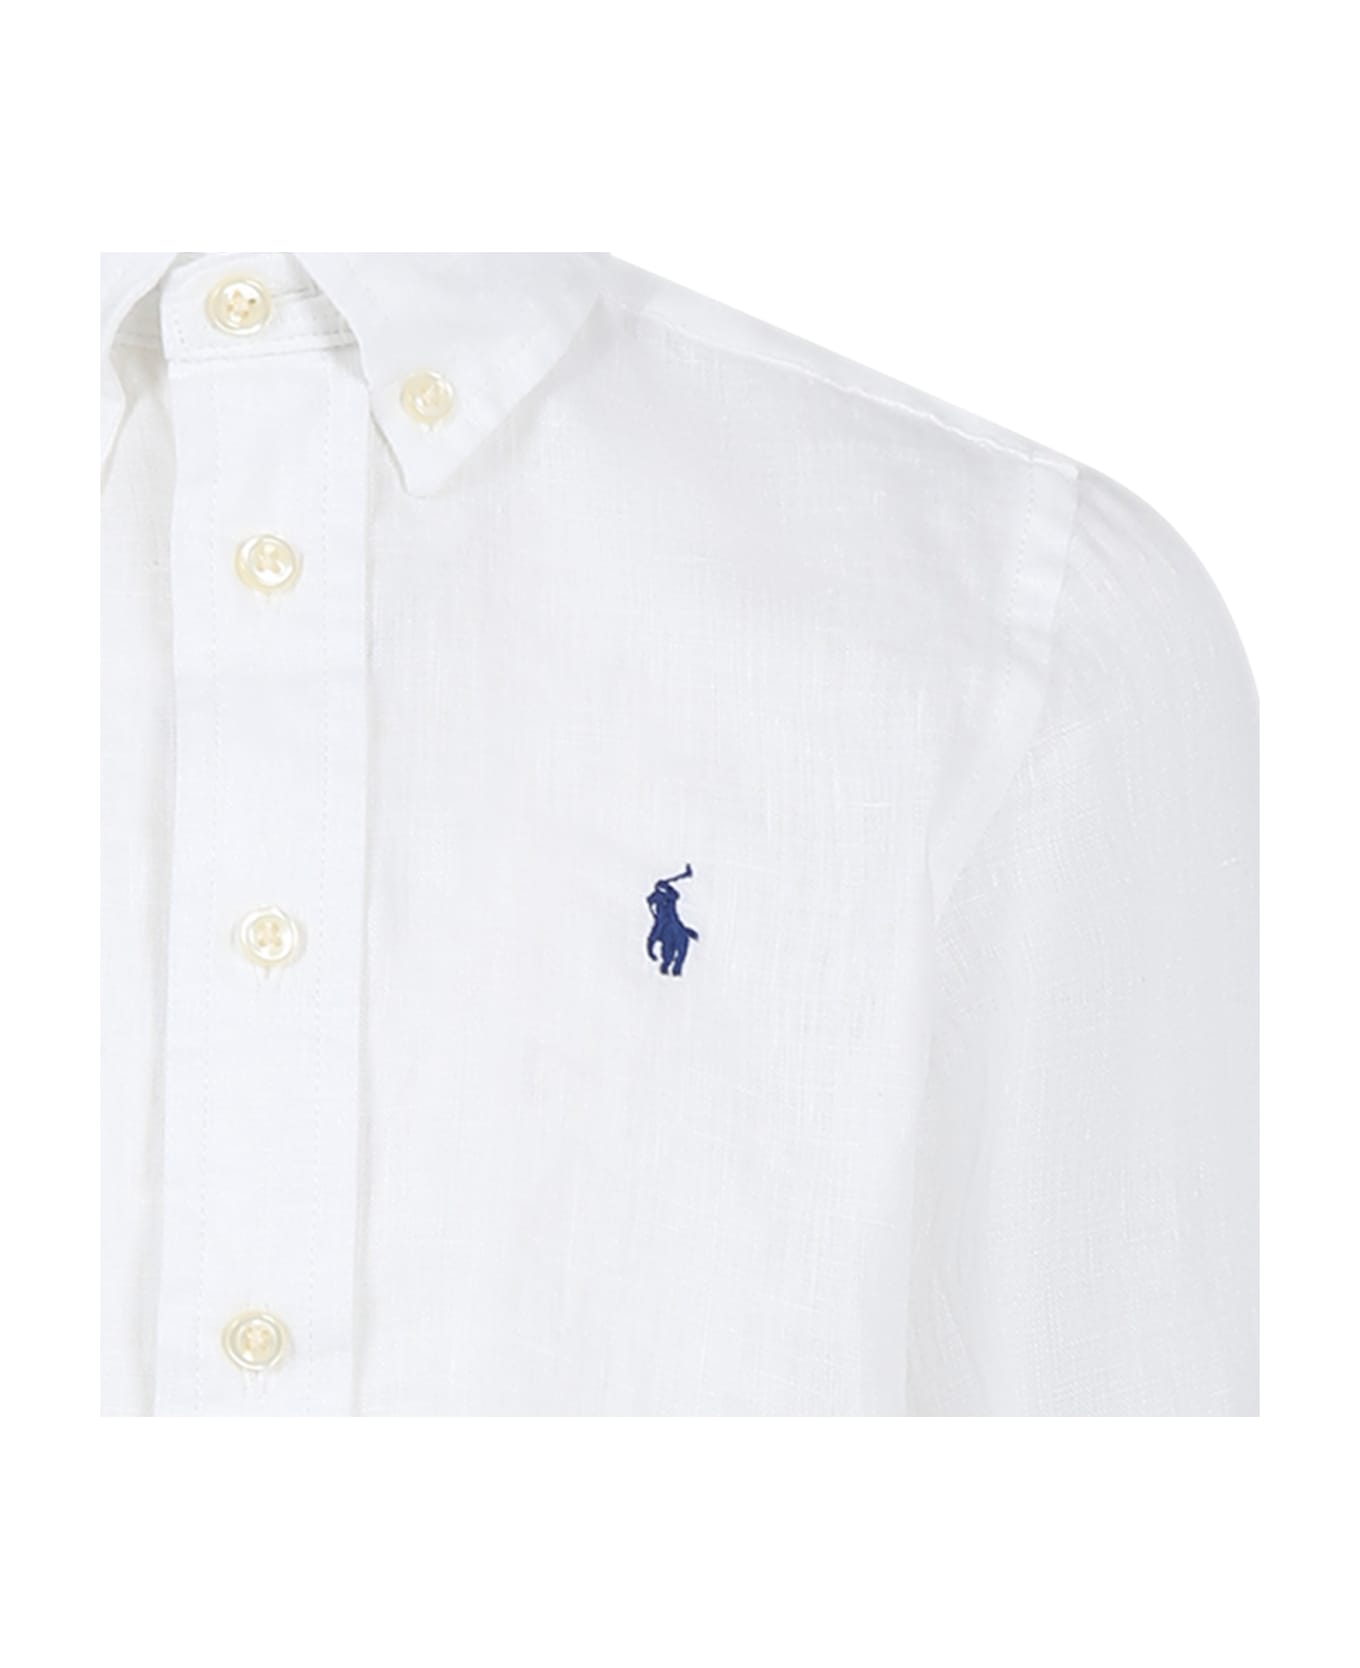 Ralph Lauren White Shirt For Boy With Pony - White シャツ